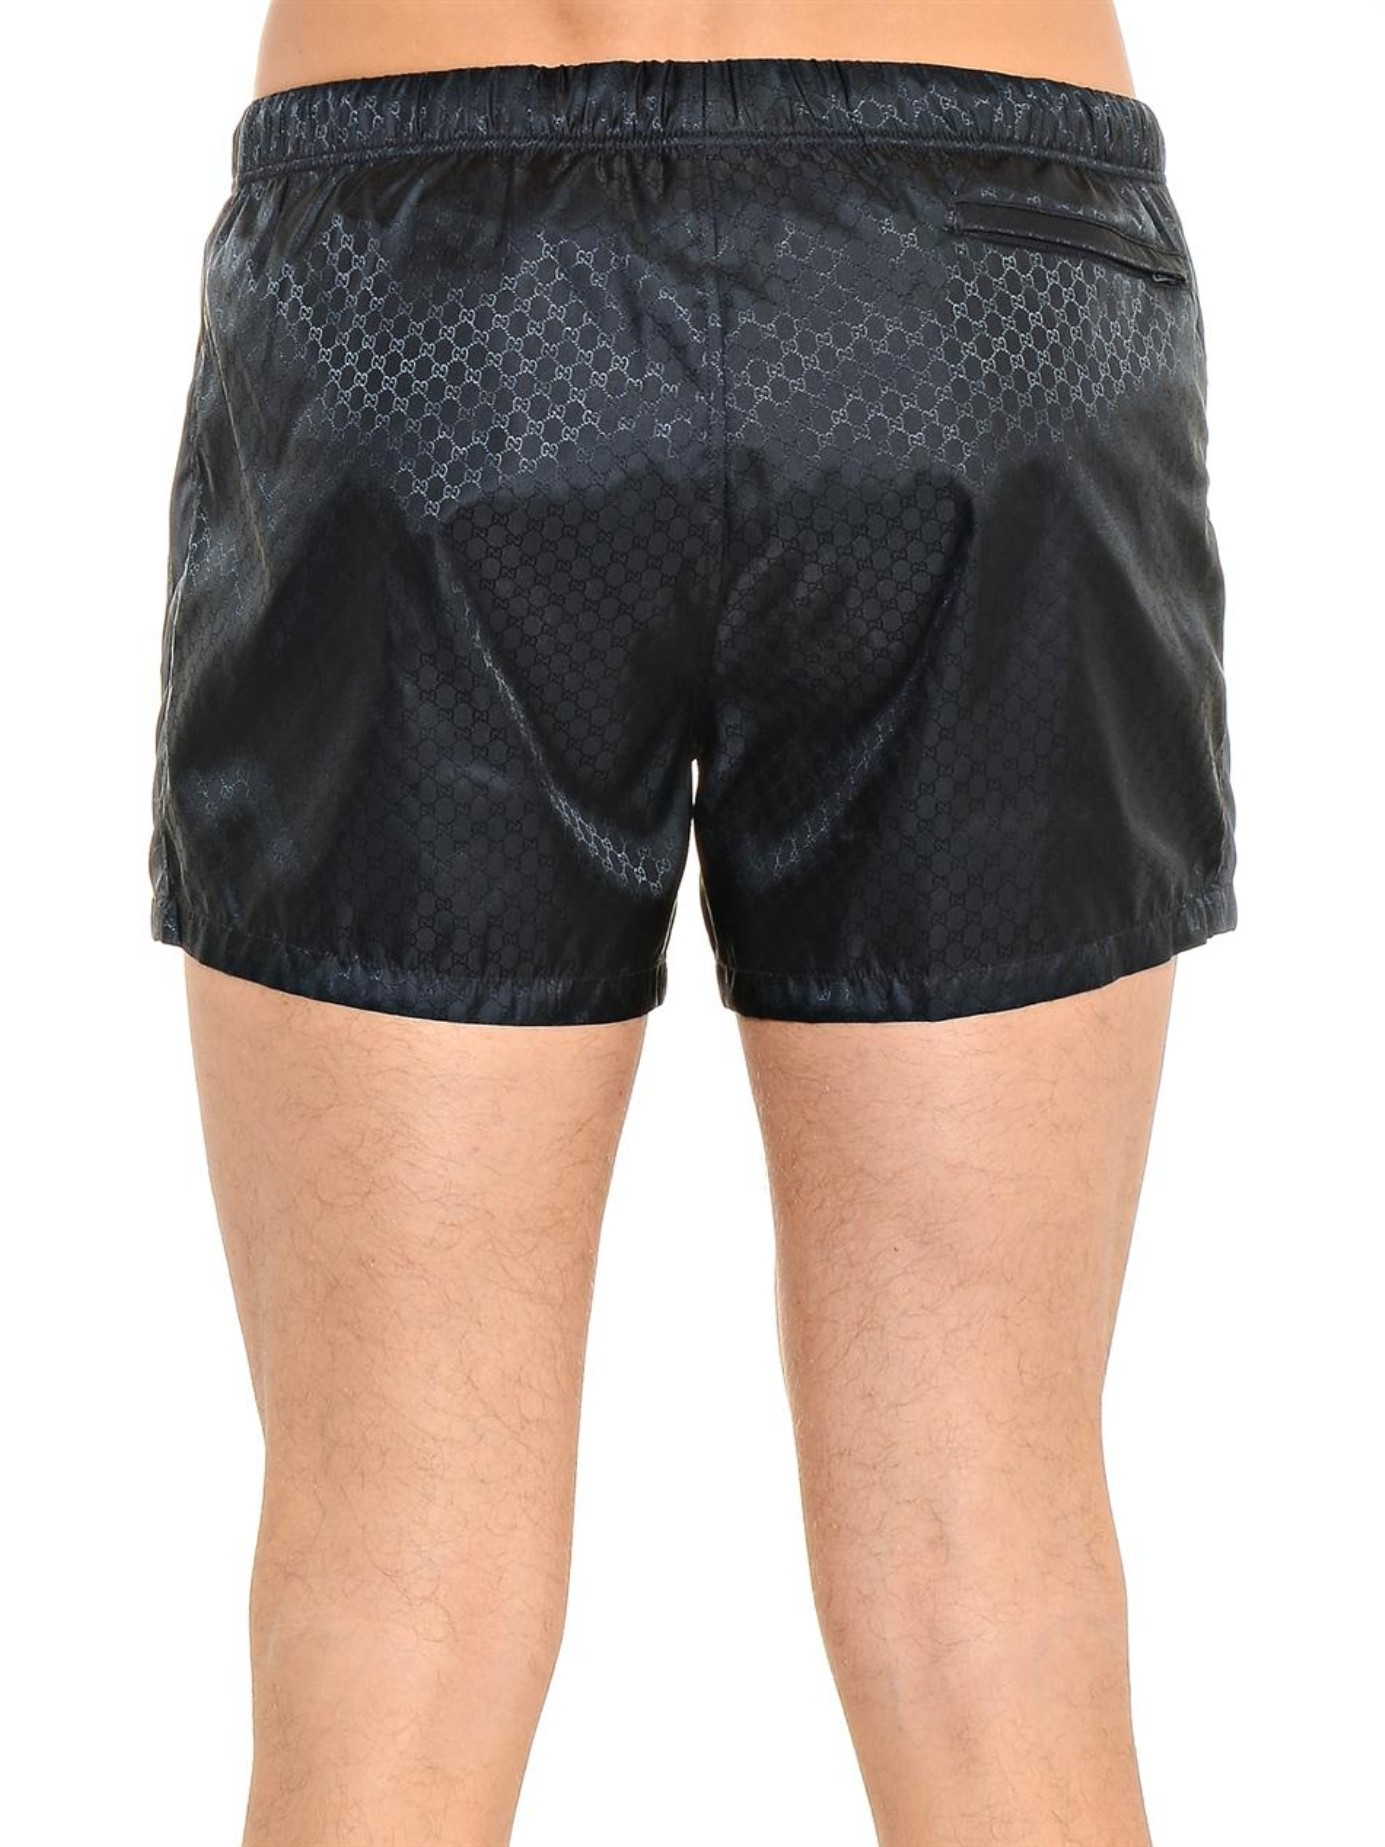 Gucci Logo-Print Swim Shorts in Blue for Men - Lyst